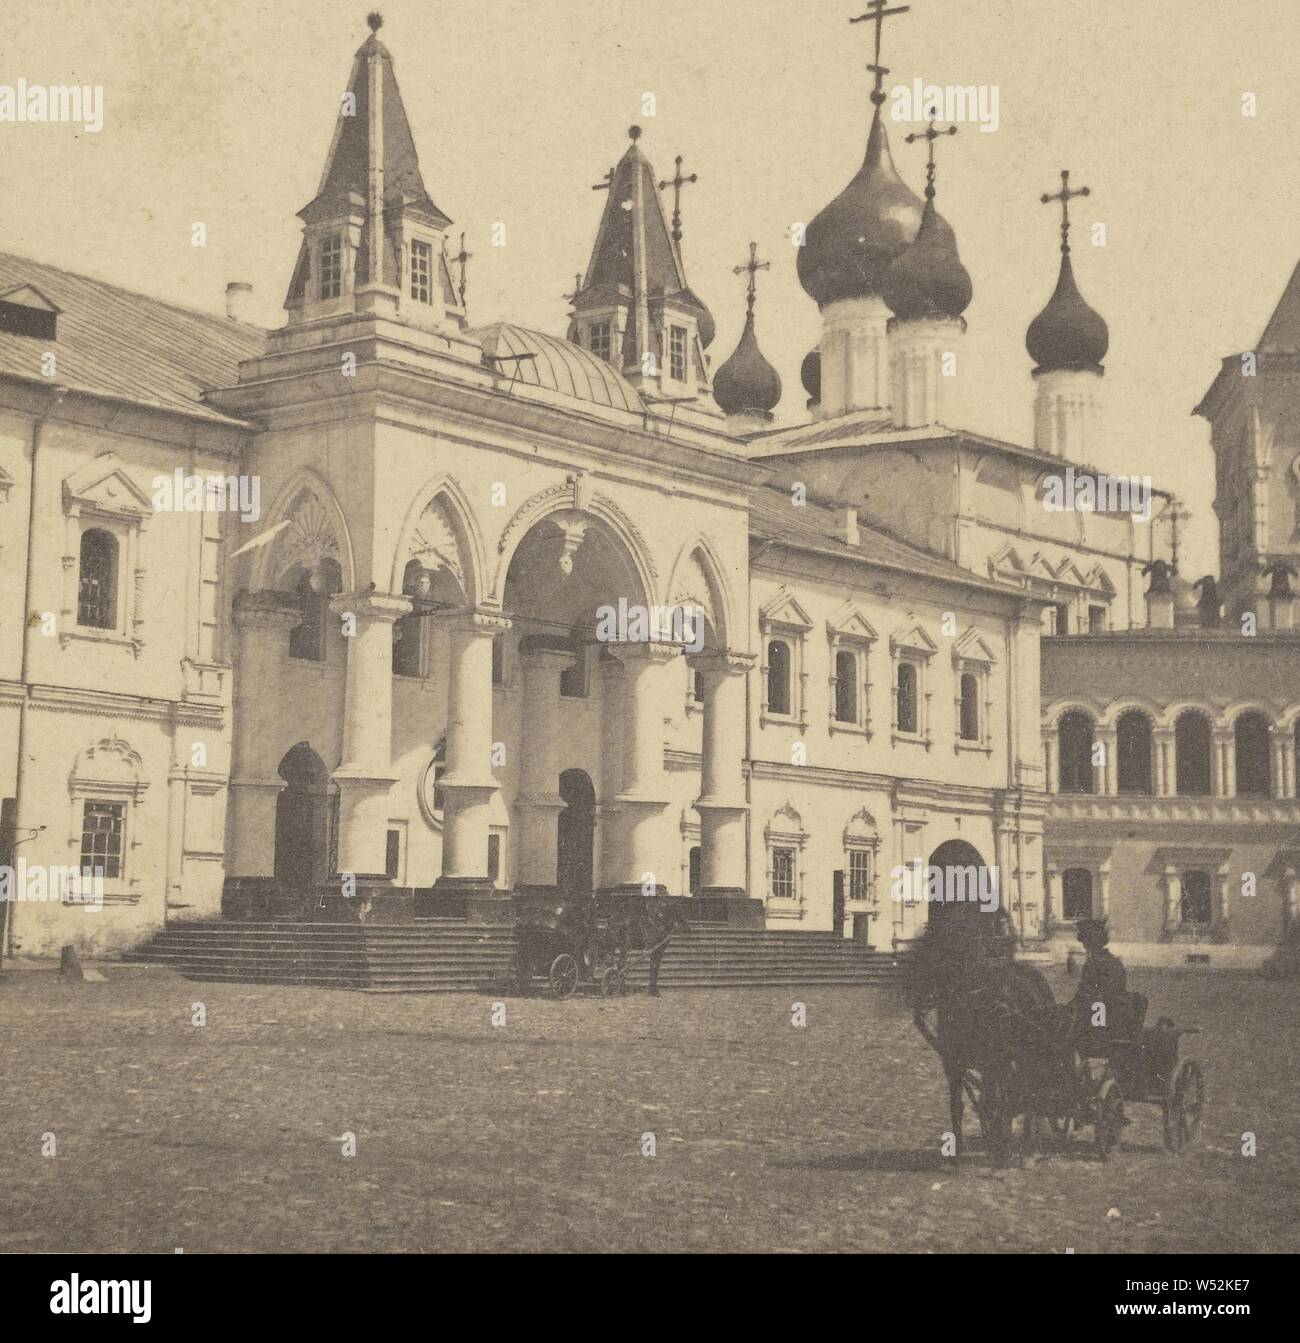 Moscou/ Eglise au Cremlino, attribuita a Ferdinando Bureau (francese, circa 1820 - 1893), 1865-1875, sale stampa Foto Stock